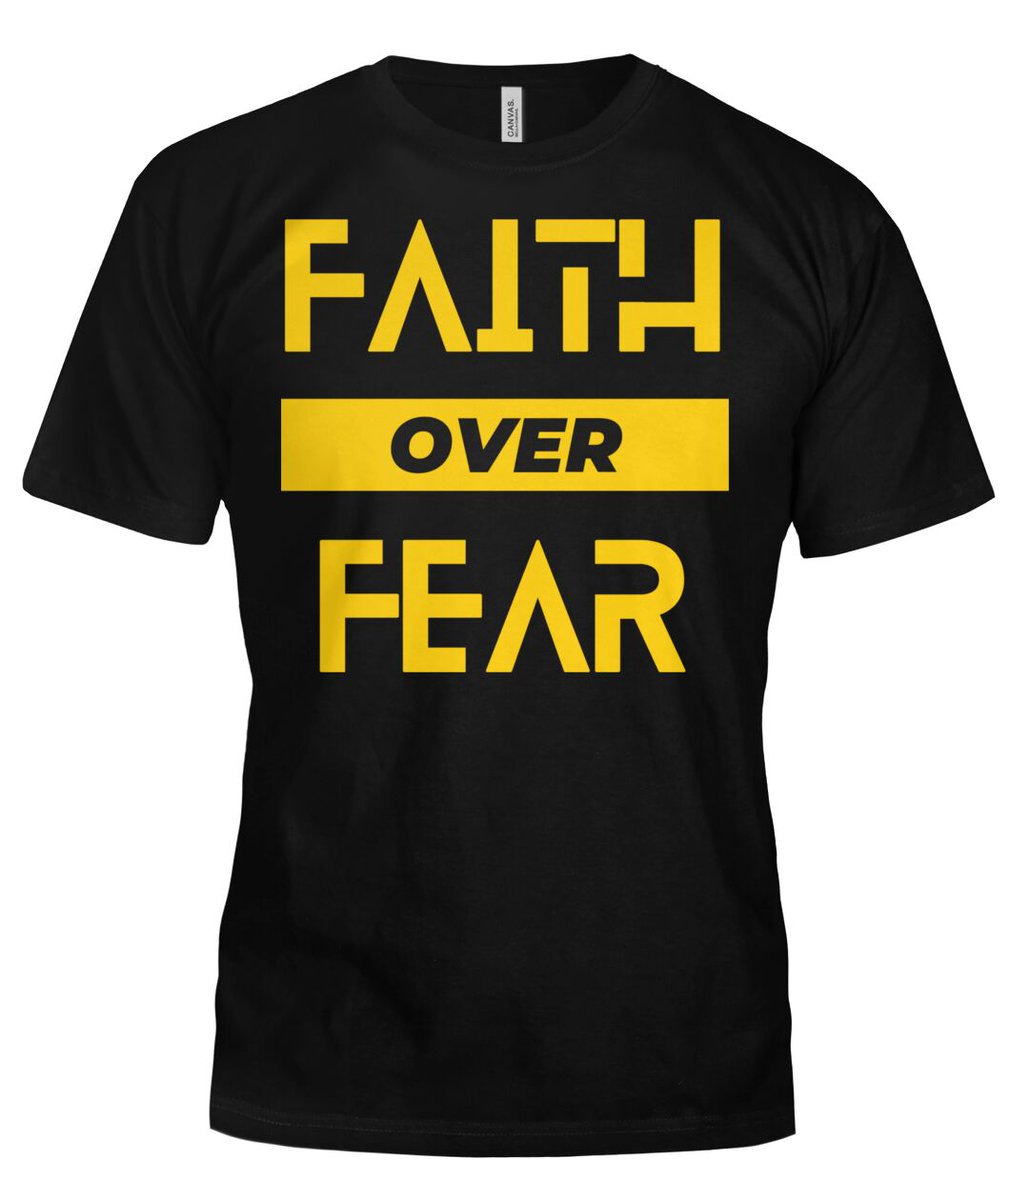 Christian Faith T-Shirts ✝️ 👇🙏🖤
viralstyle.com/c/voY4GB#pid=1…

.
#christianshirts #christiantshirts #faithoverfear #JesusIsLord